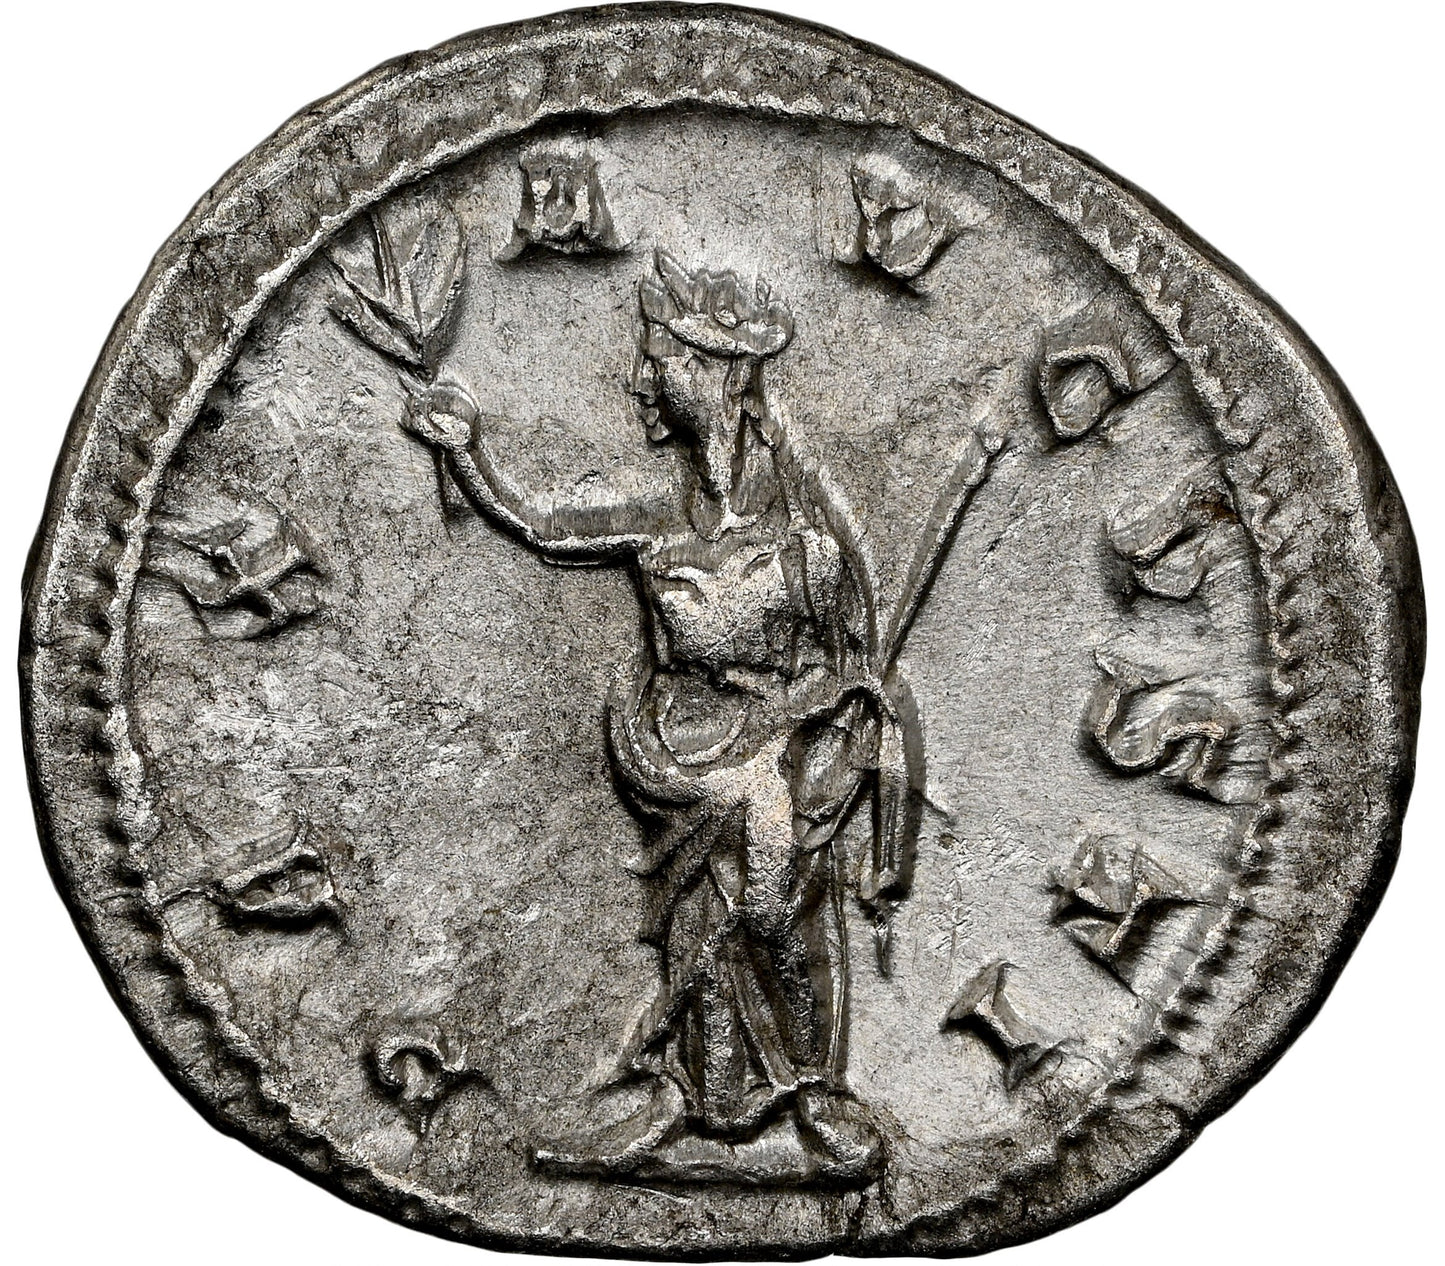 Roman Empire - Maximinus I - Silver Denarius - NGC Ch XF